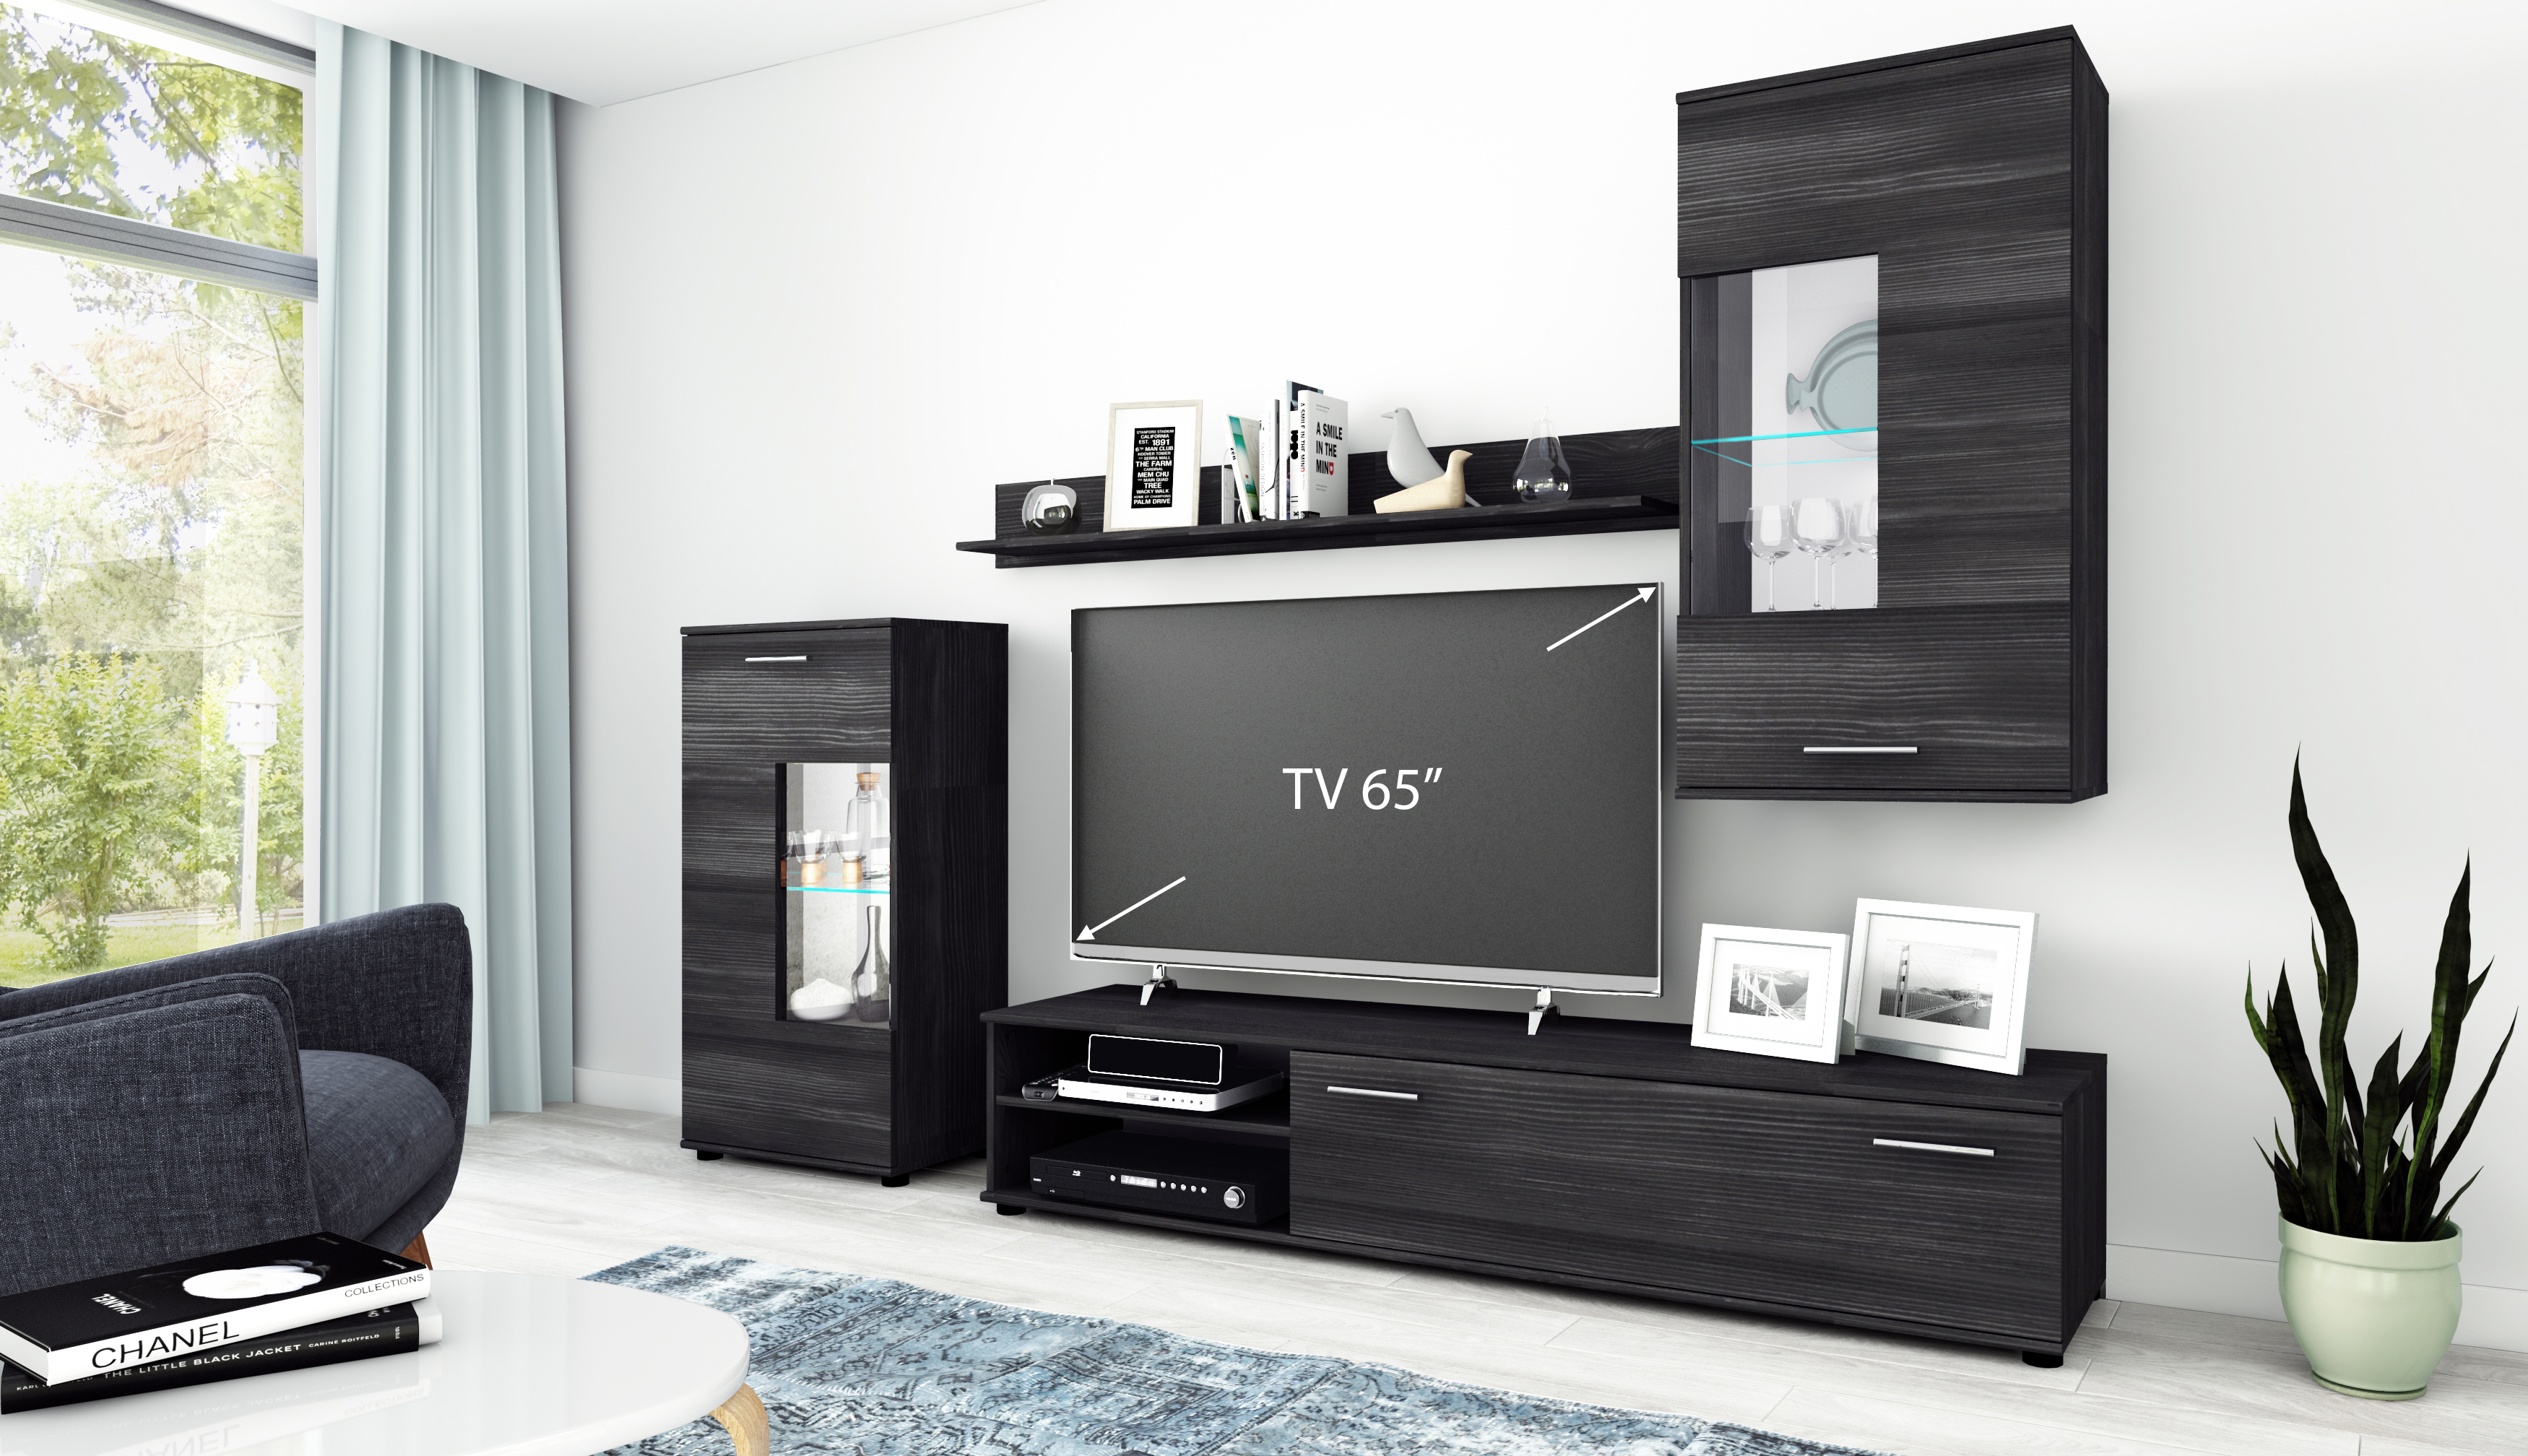 Wohnwand Anbauwand Tv Wand Wohnzimmer Mobel Set Cool 4 Teilig Schwarz Ebay